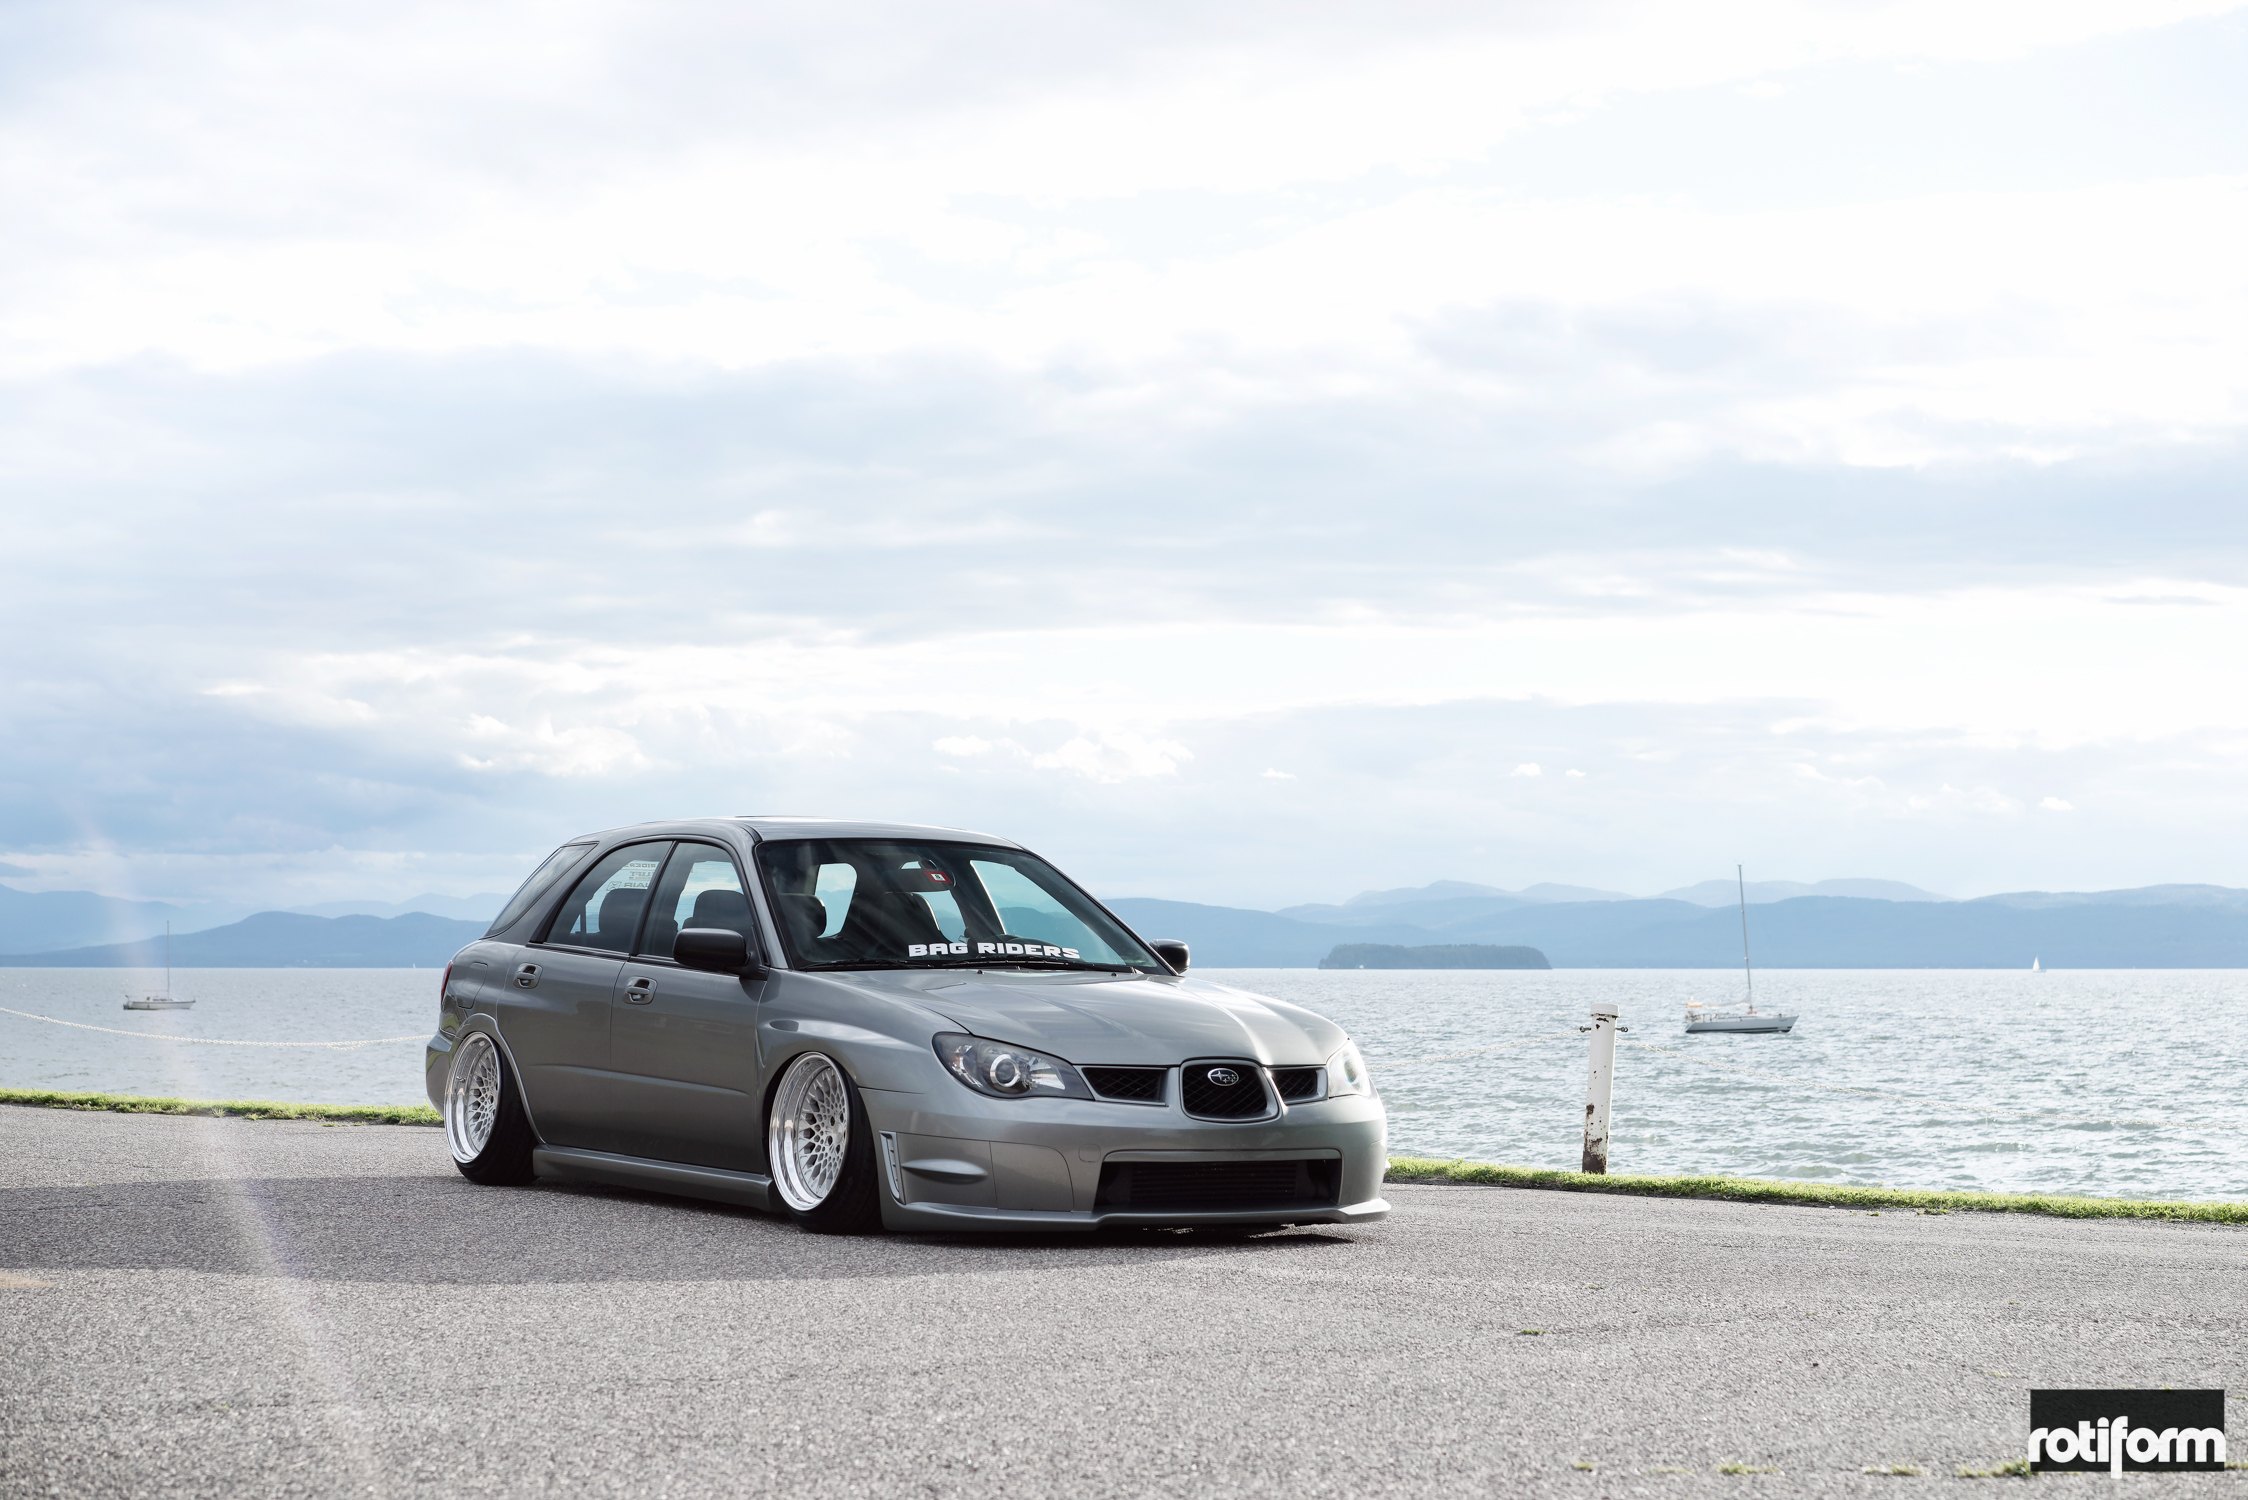 Gray Stanced Subaru WRX with Custom Front Bumper - Photo by Rotiform